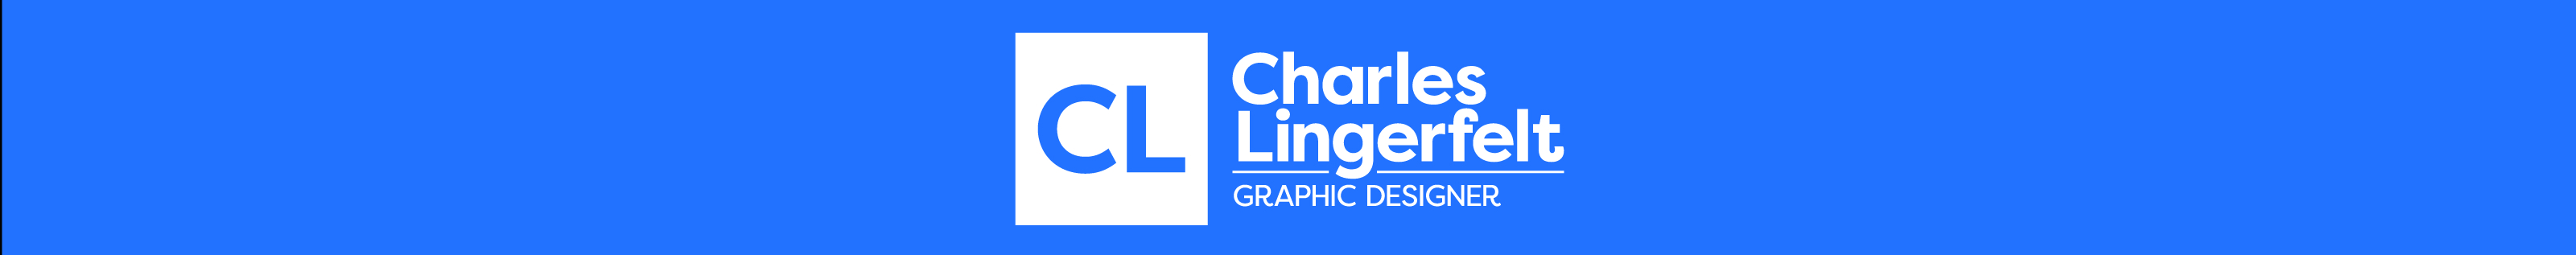 Charles Lingerfelt's profile banner